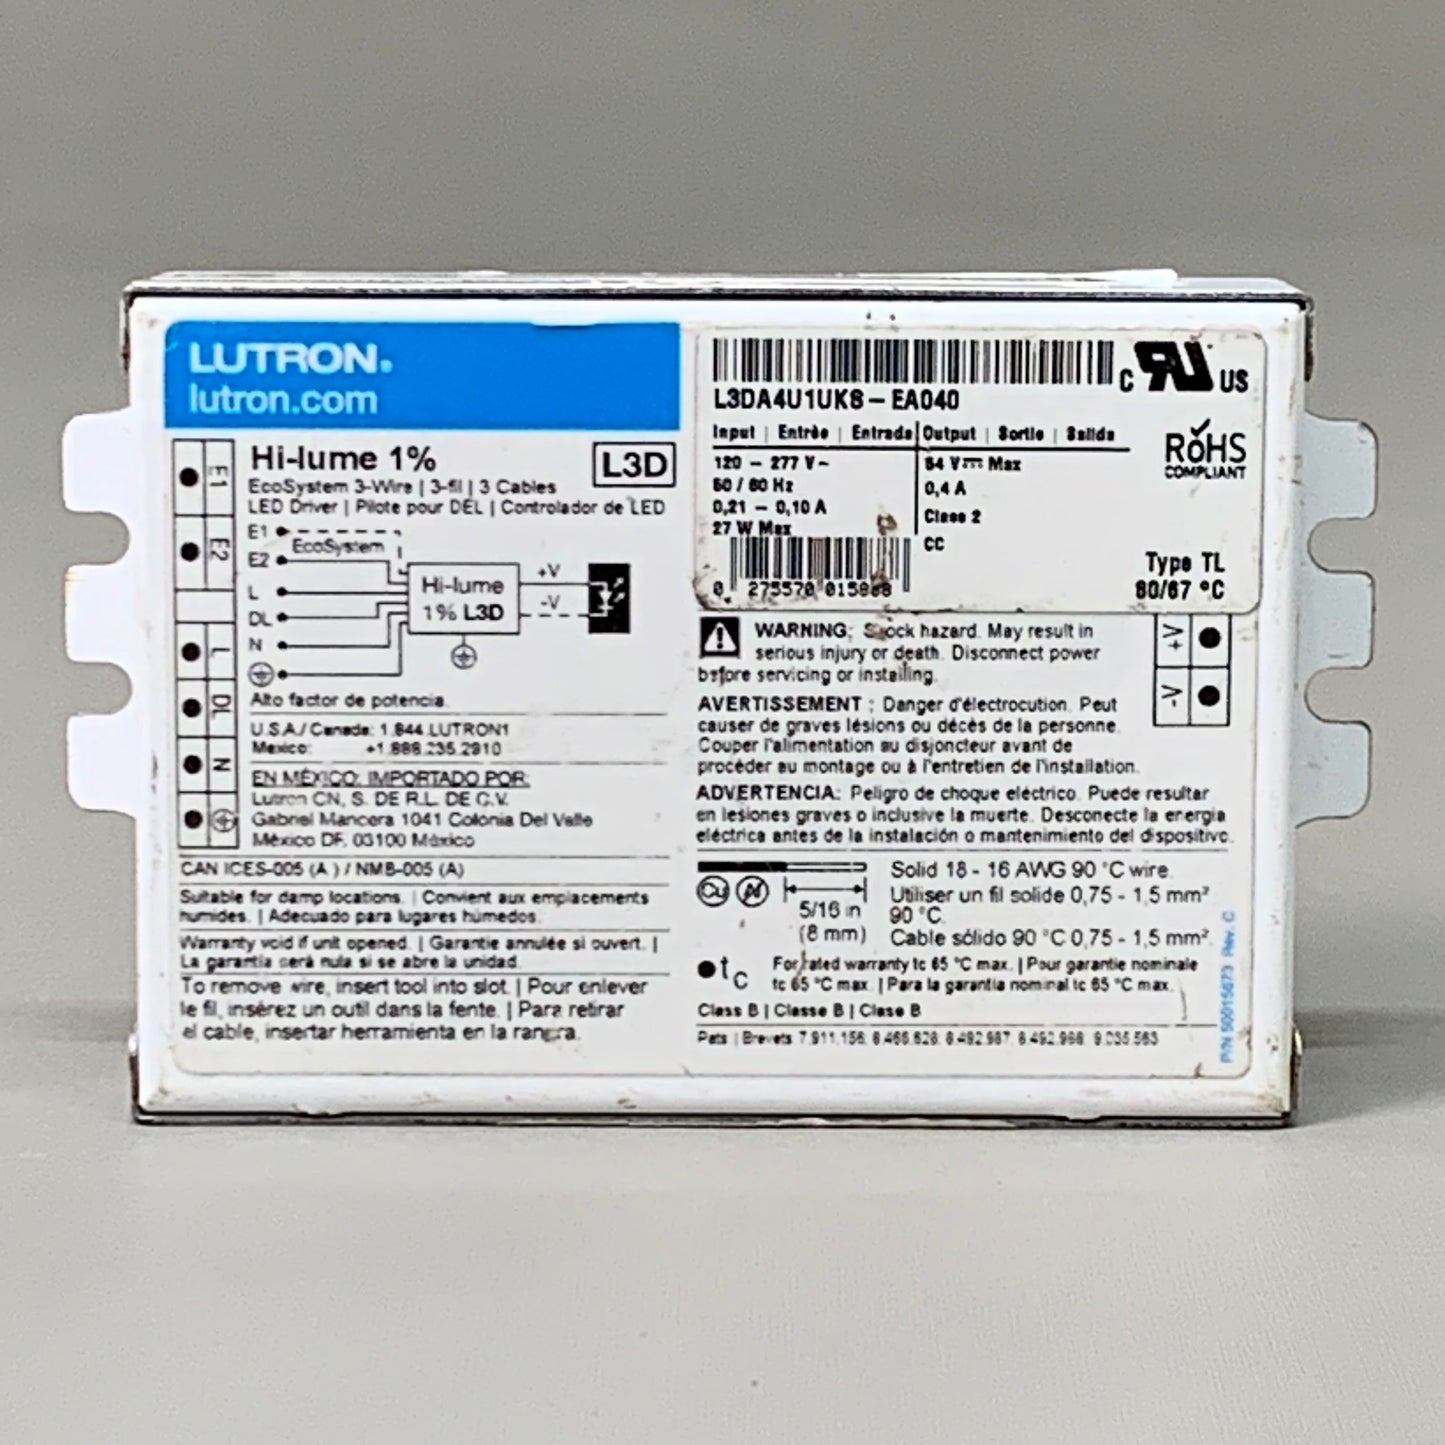 LUTRON Hi-Lume LED Driver & Power Supply LU00673 5" x 3" White 00673